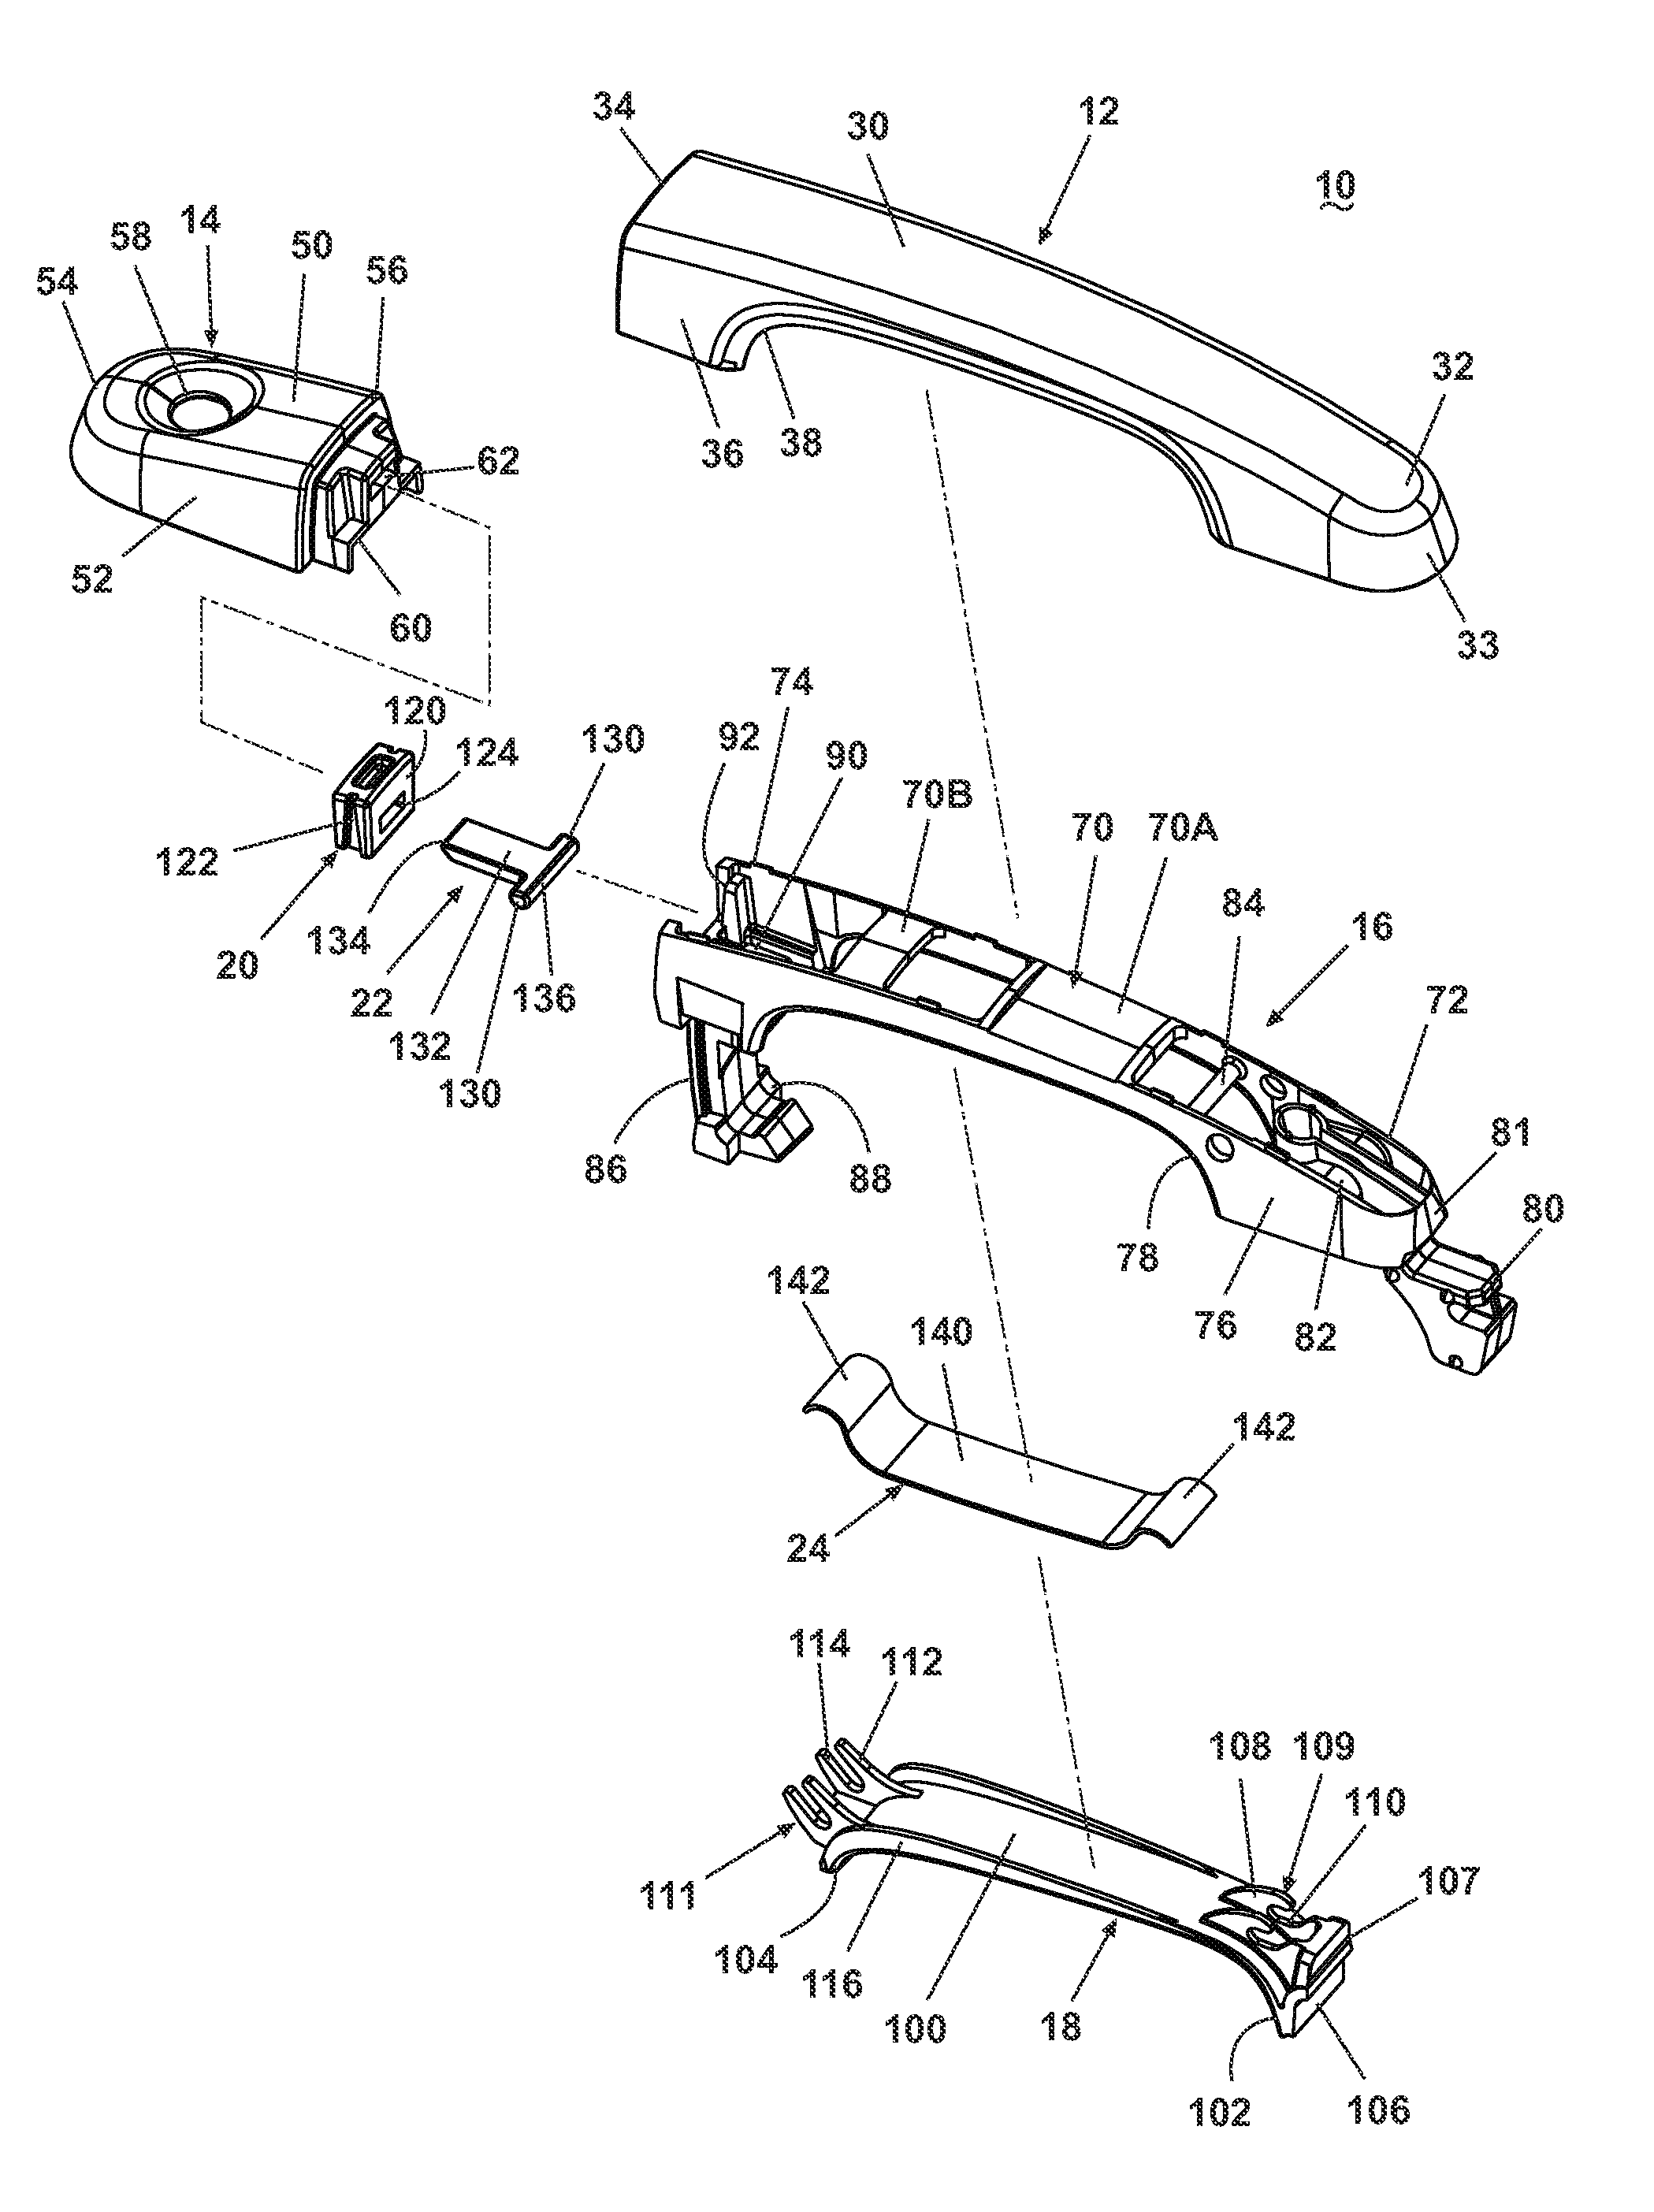 Vehicular door handle included secondary latch